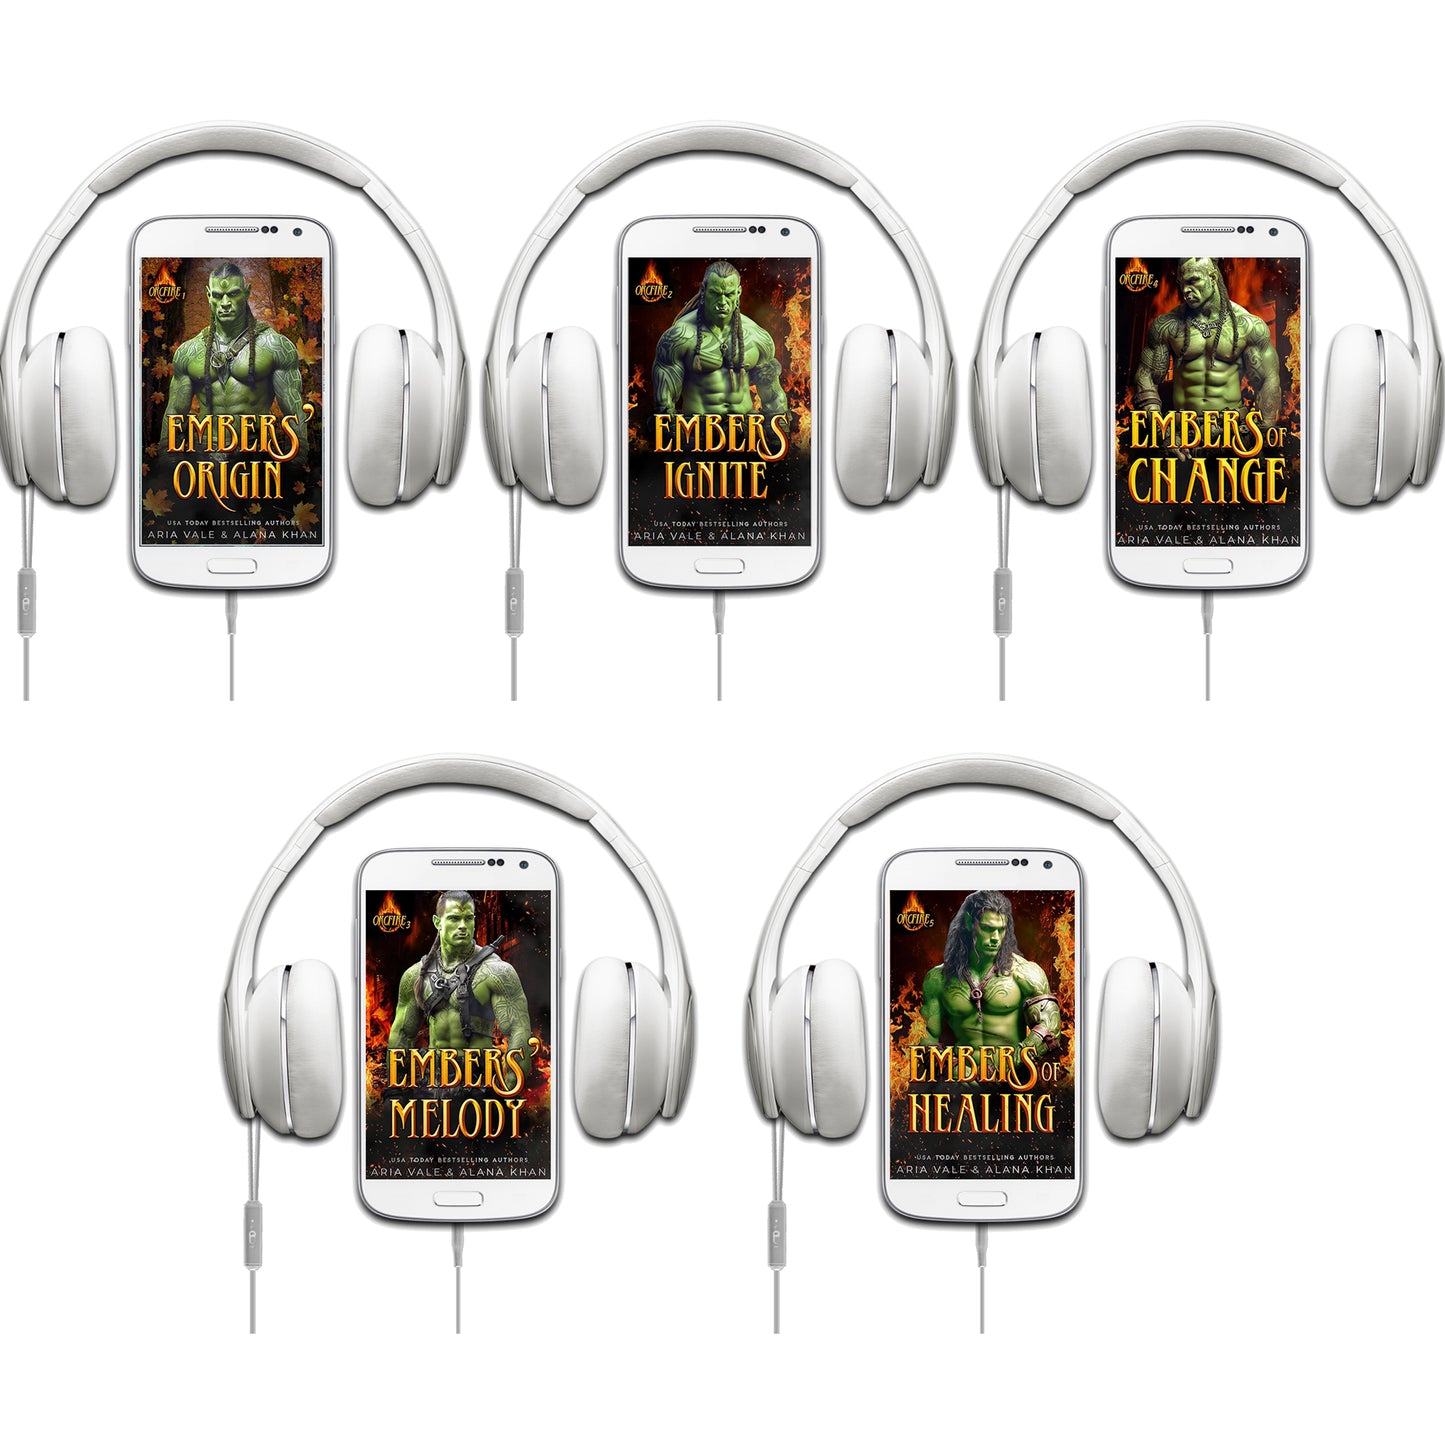 OrcFire (5 book series) Audiobook Set